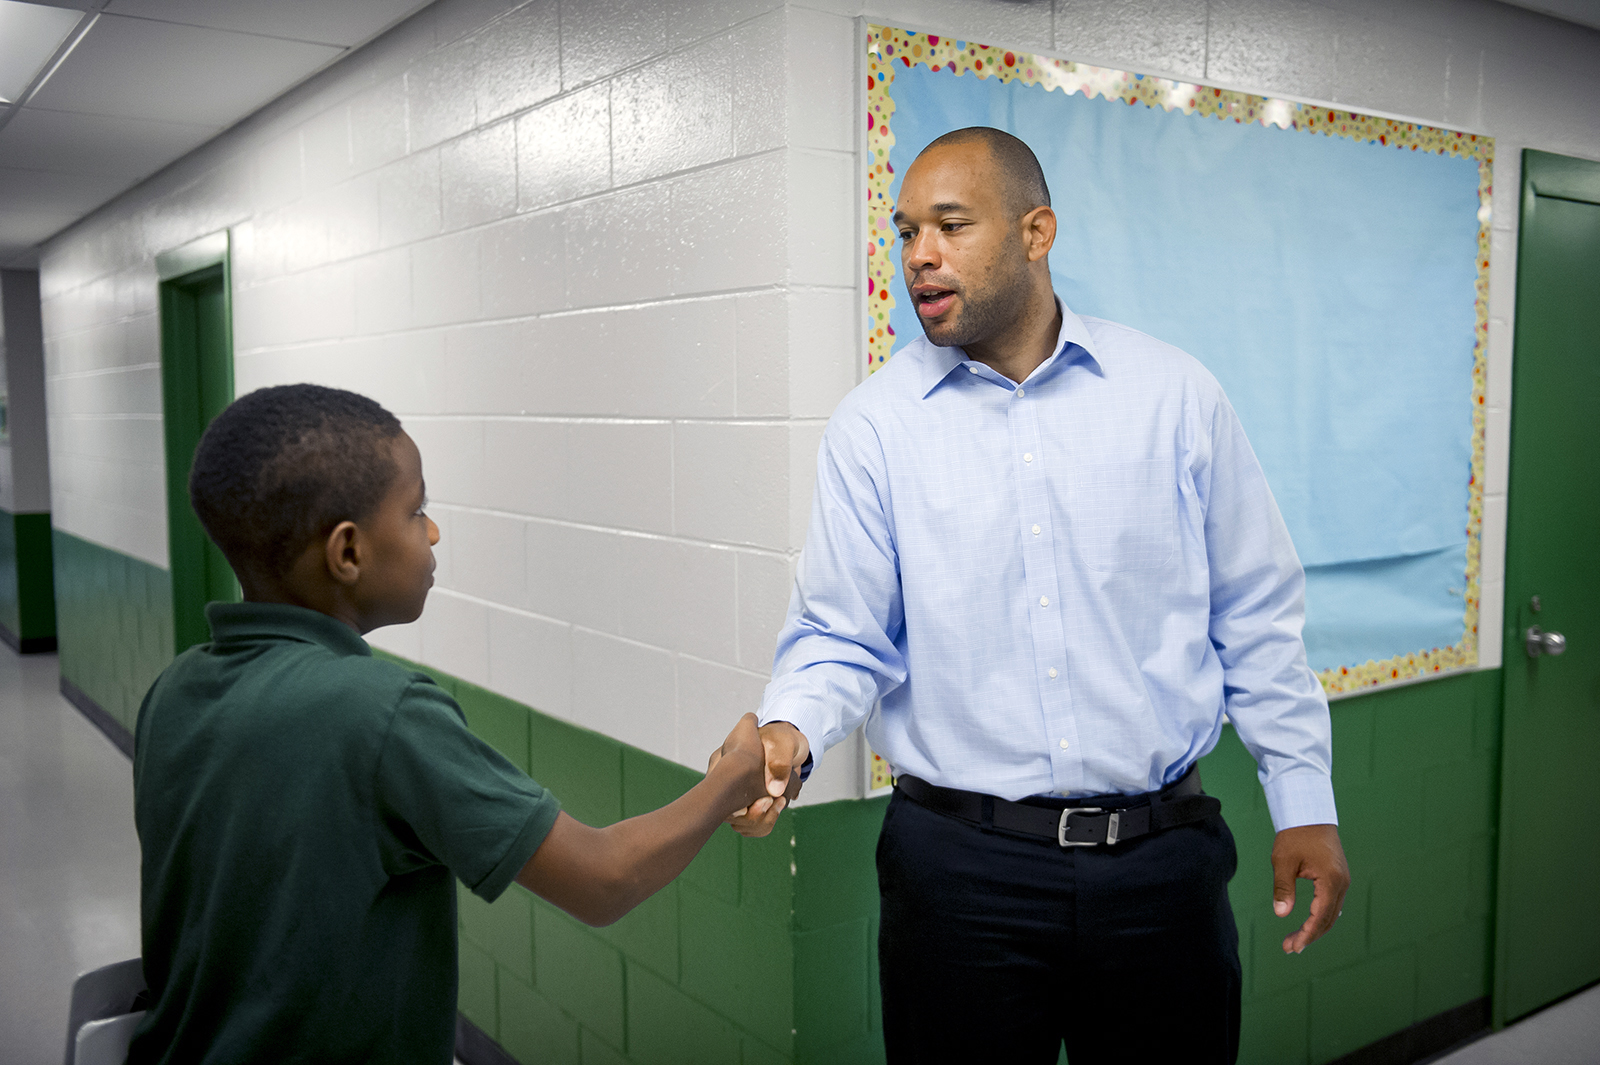 Marcus Washington greets a student in the halls at Washington Jesuit Academy in 2018 in Washington, D.C. Photo by Rod Lamkey Jr./WJA